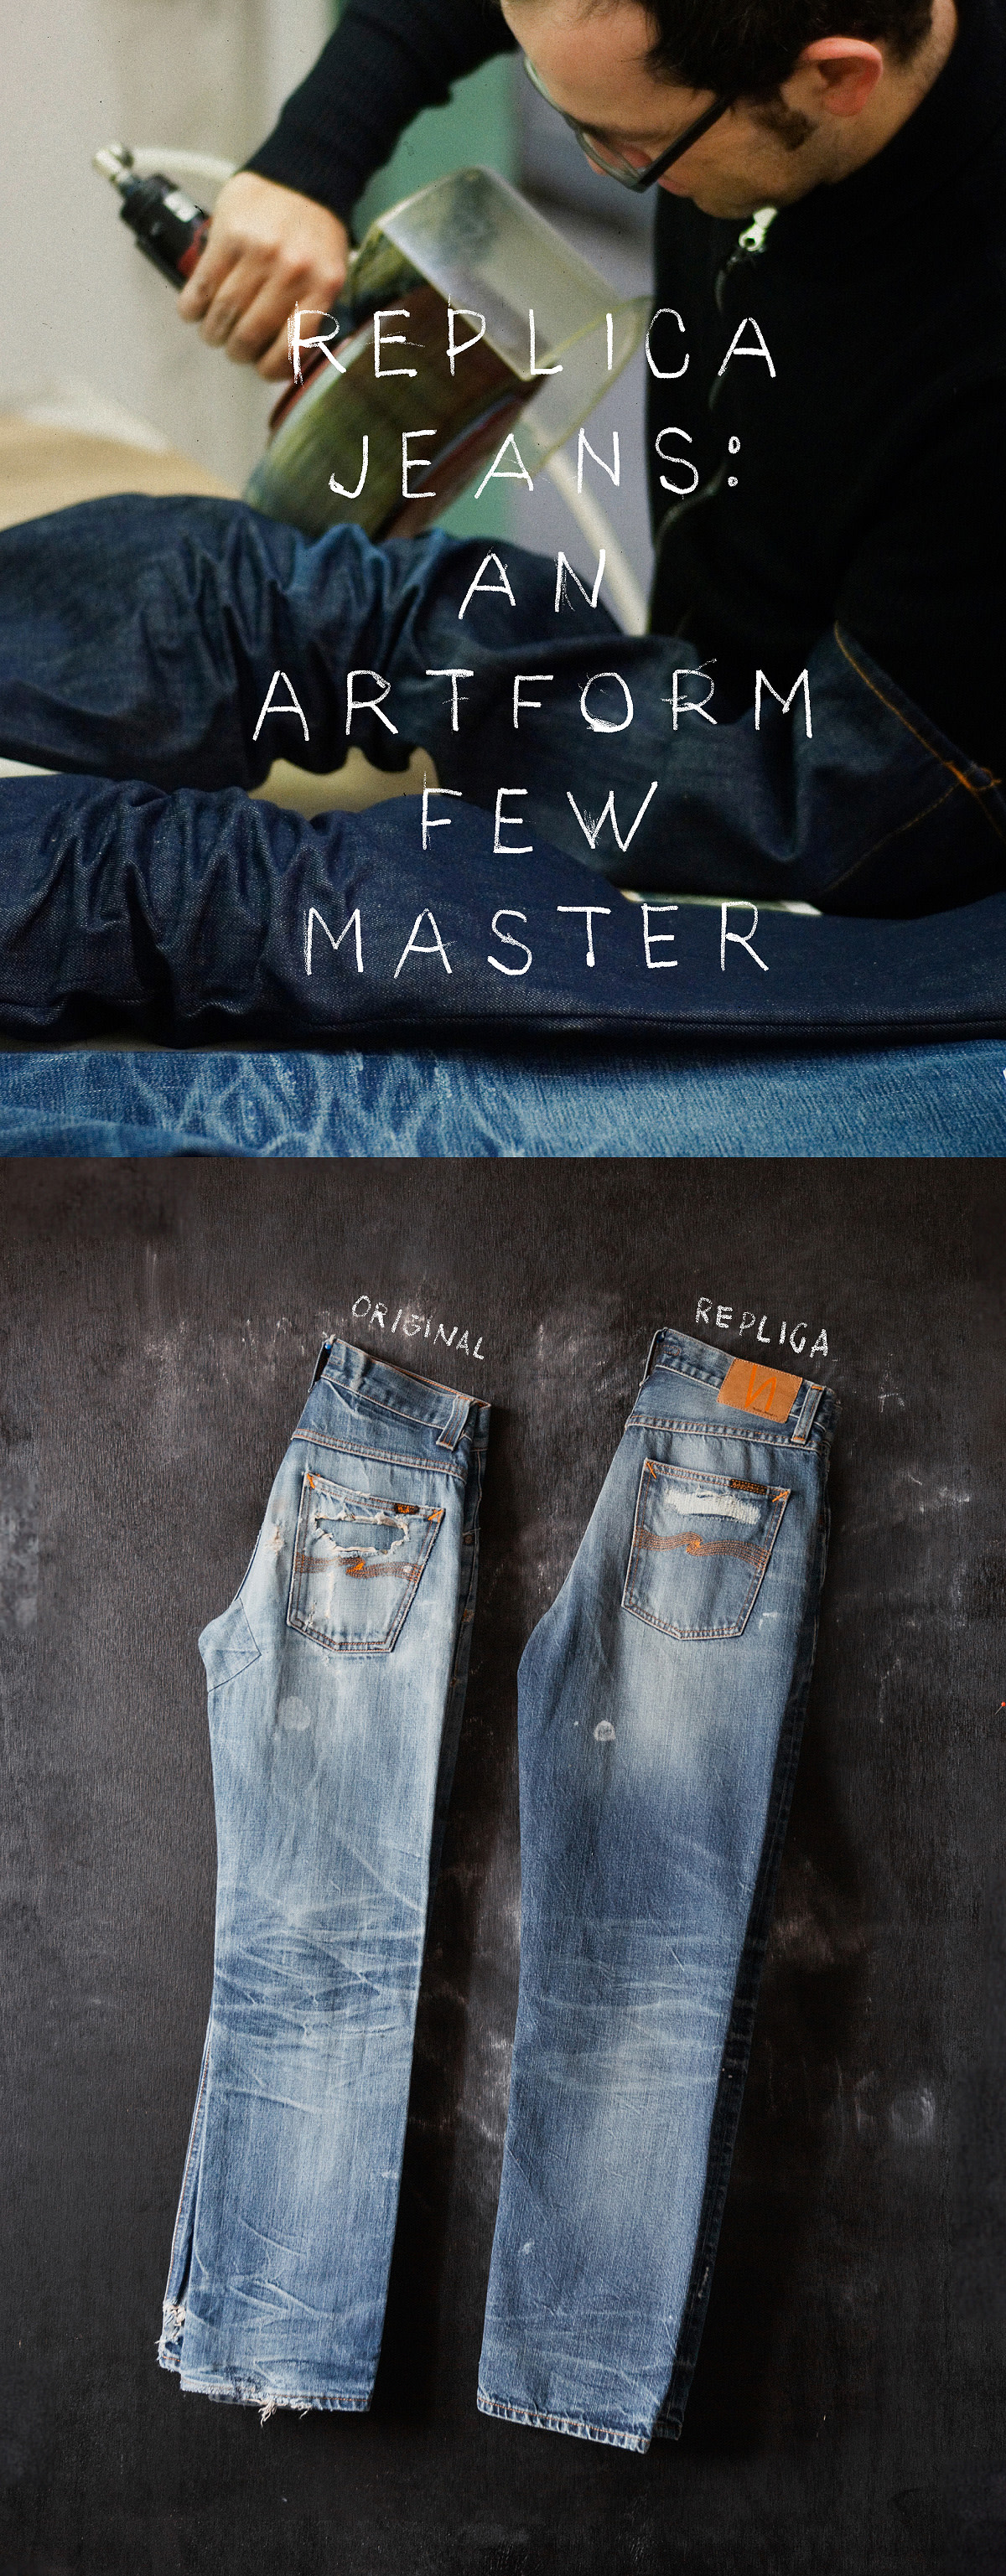 Replica Jeans: An artform few master